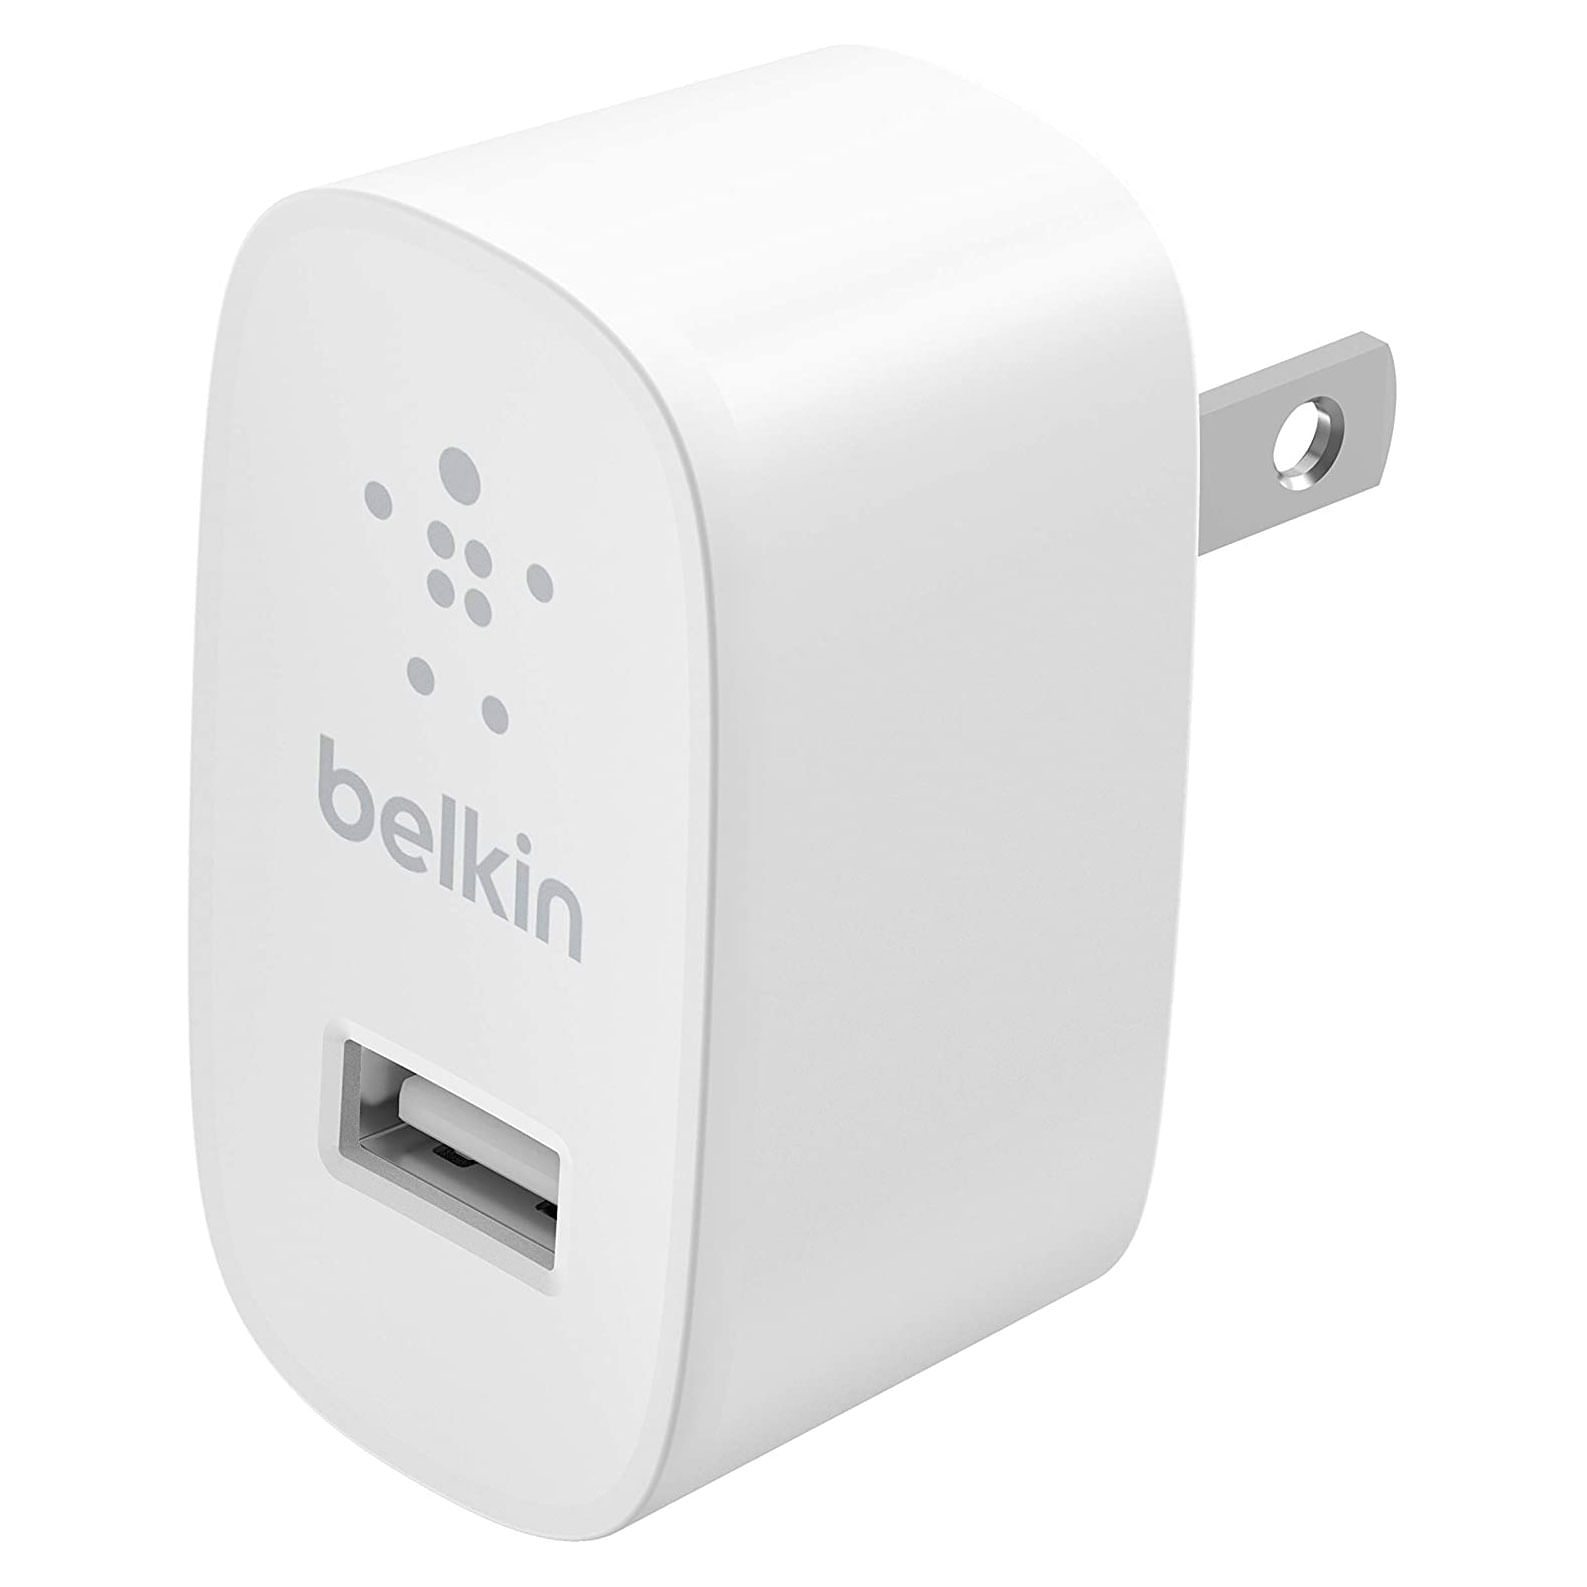 Belkin Kit Cargador para iPhone - iPad – BYRICHH